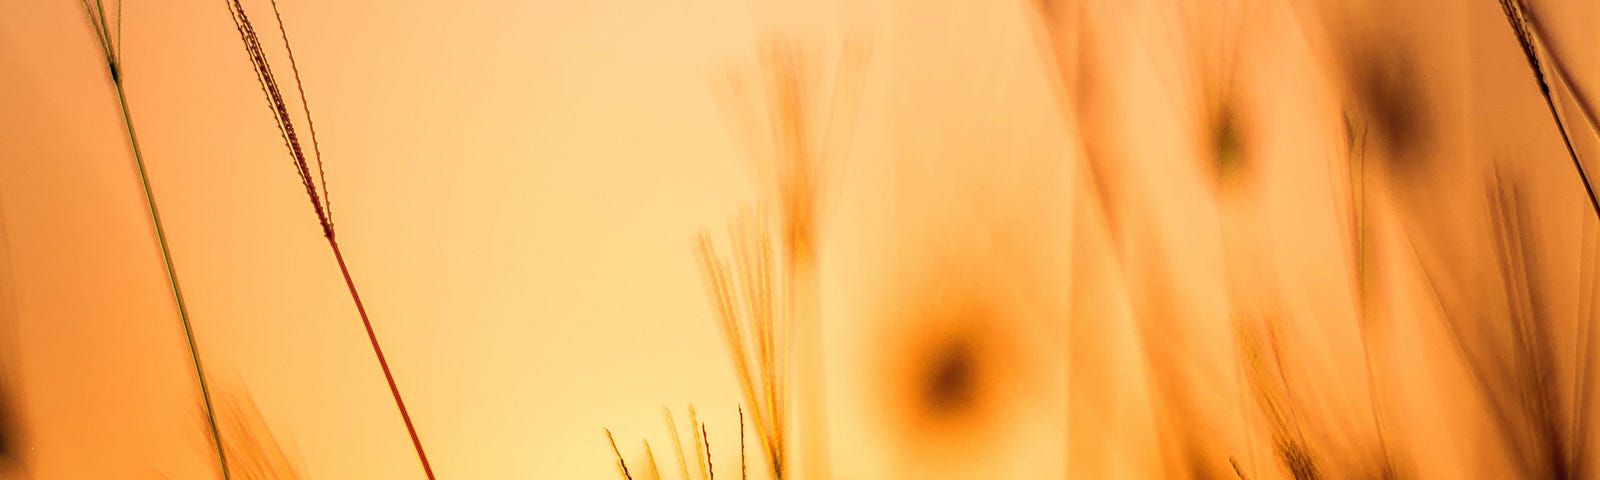 sunset; yellow sun going down behind wheat field